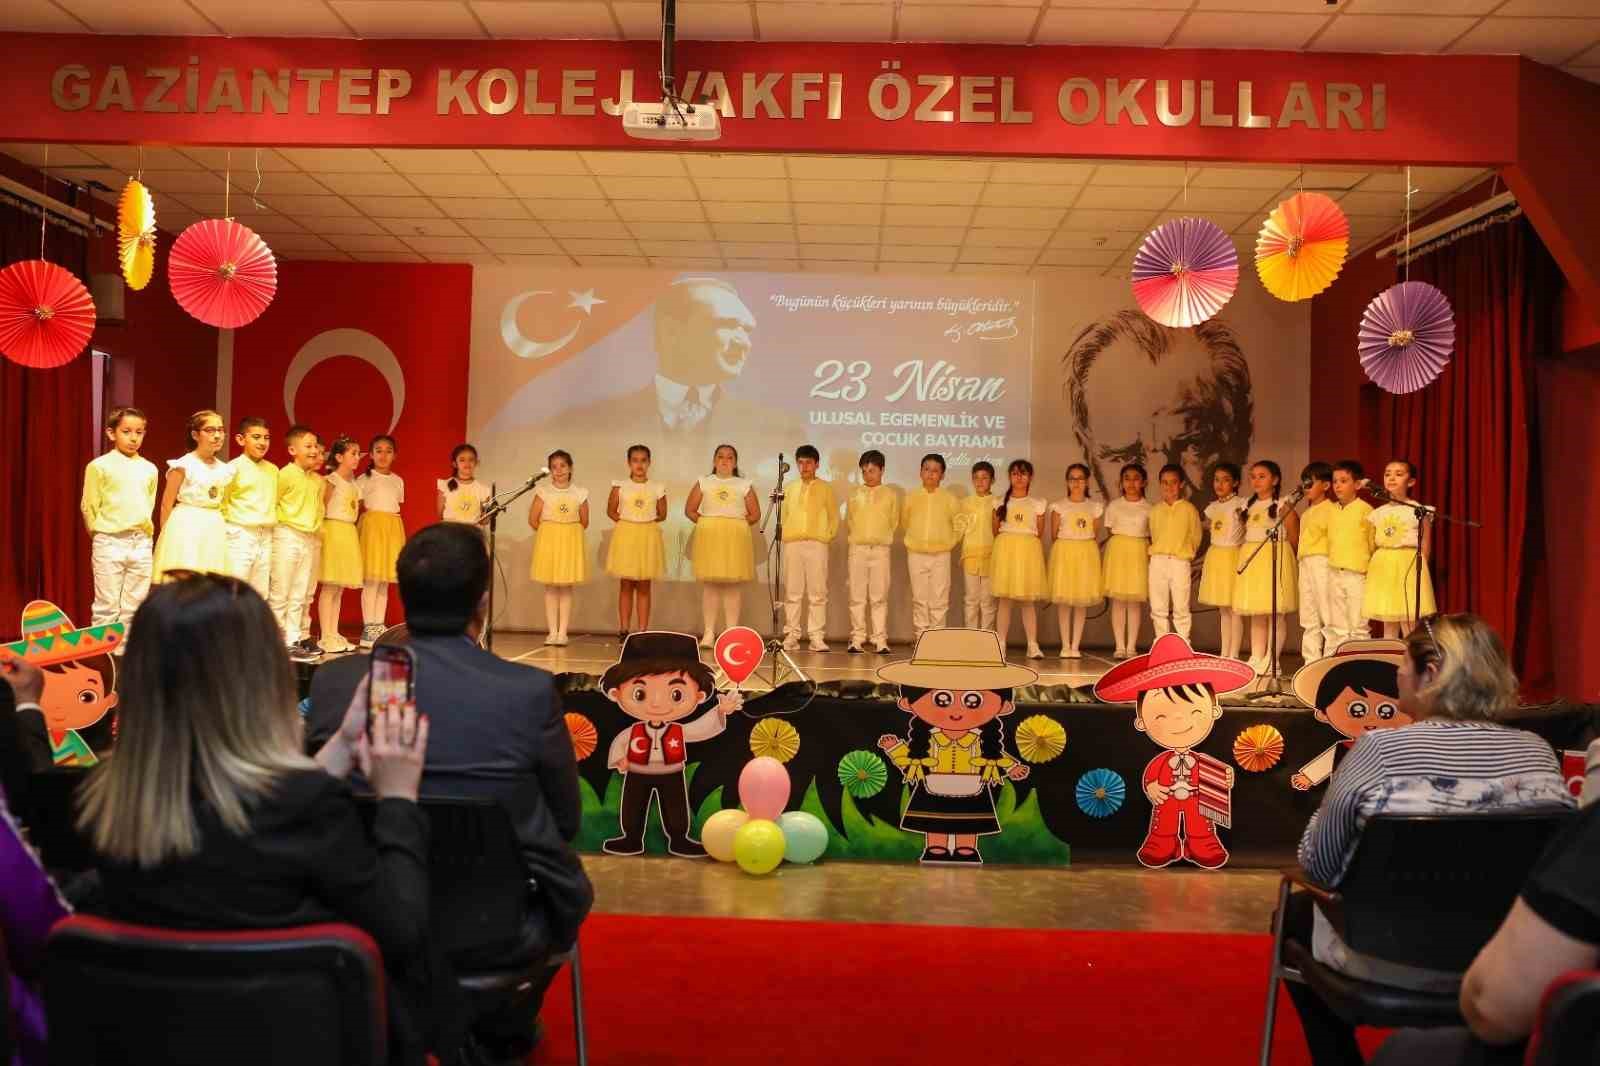 Gaziantep Kolej Vakfı’nda 23 Nisan coşkusu
